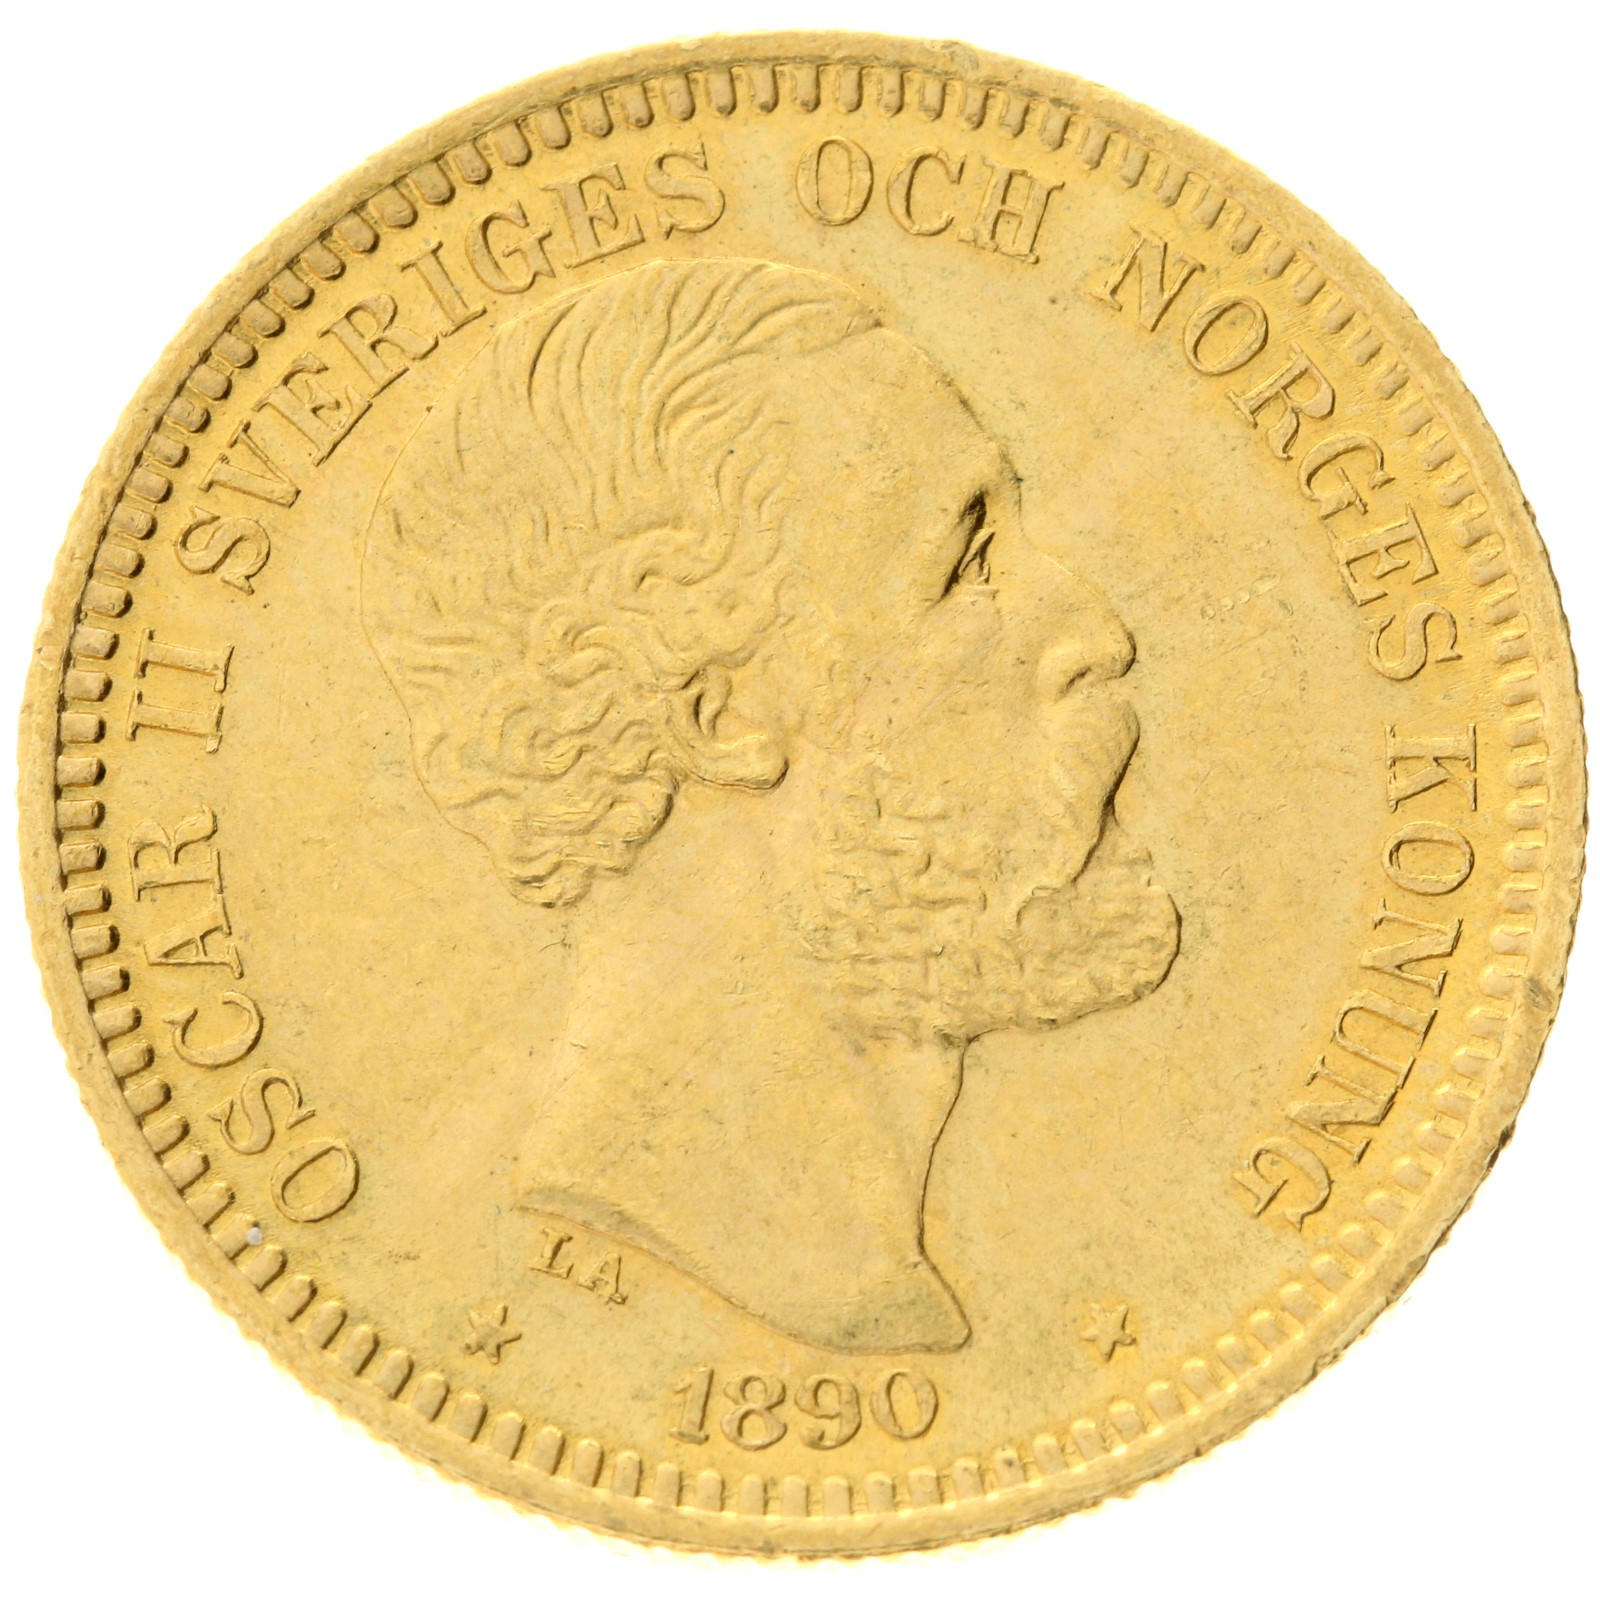 Sweden - 20 kronor - 1890 - Oscar II 